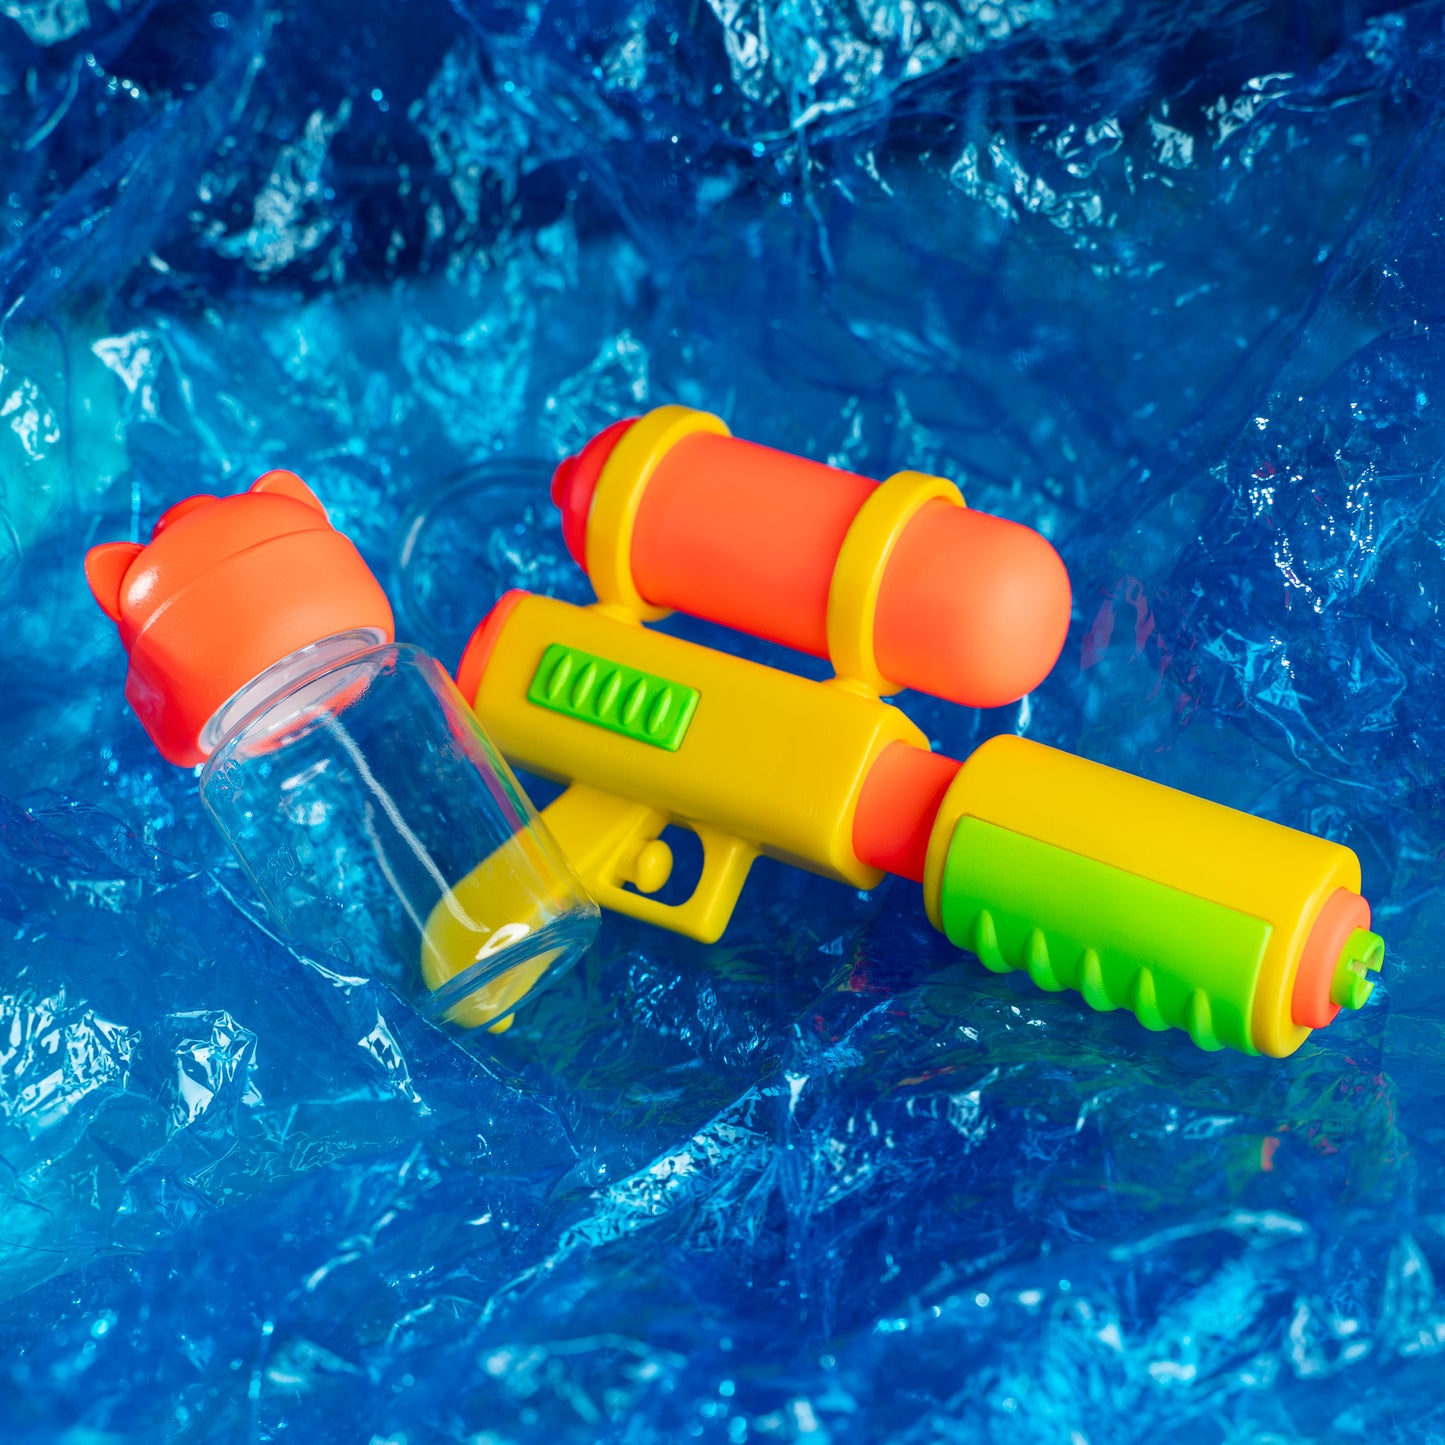 Water Gun – Soaker Retro - Large